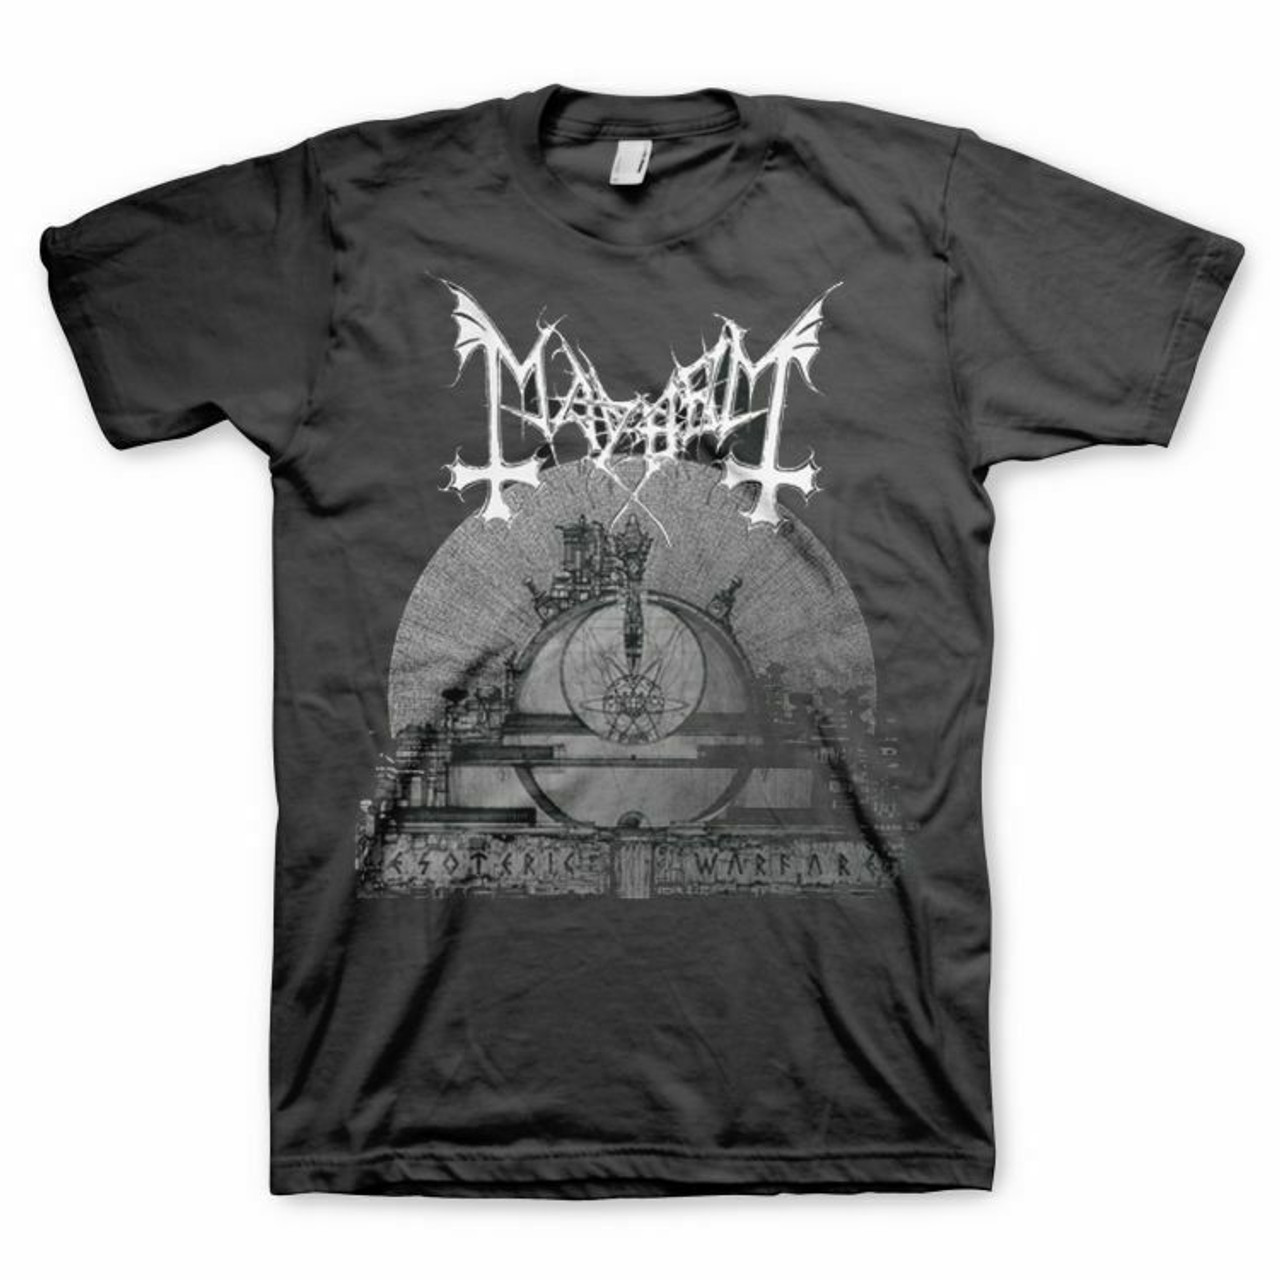 Mayhem Esoteric Warfare Norwegian Black Metal Goth Music Band T Shirt  10069983